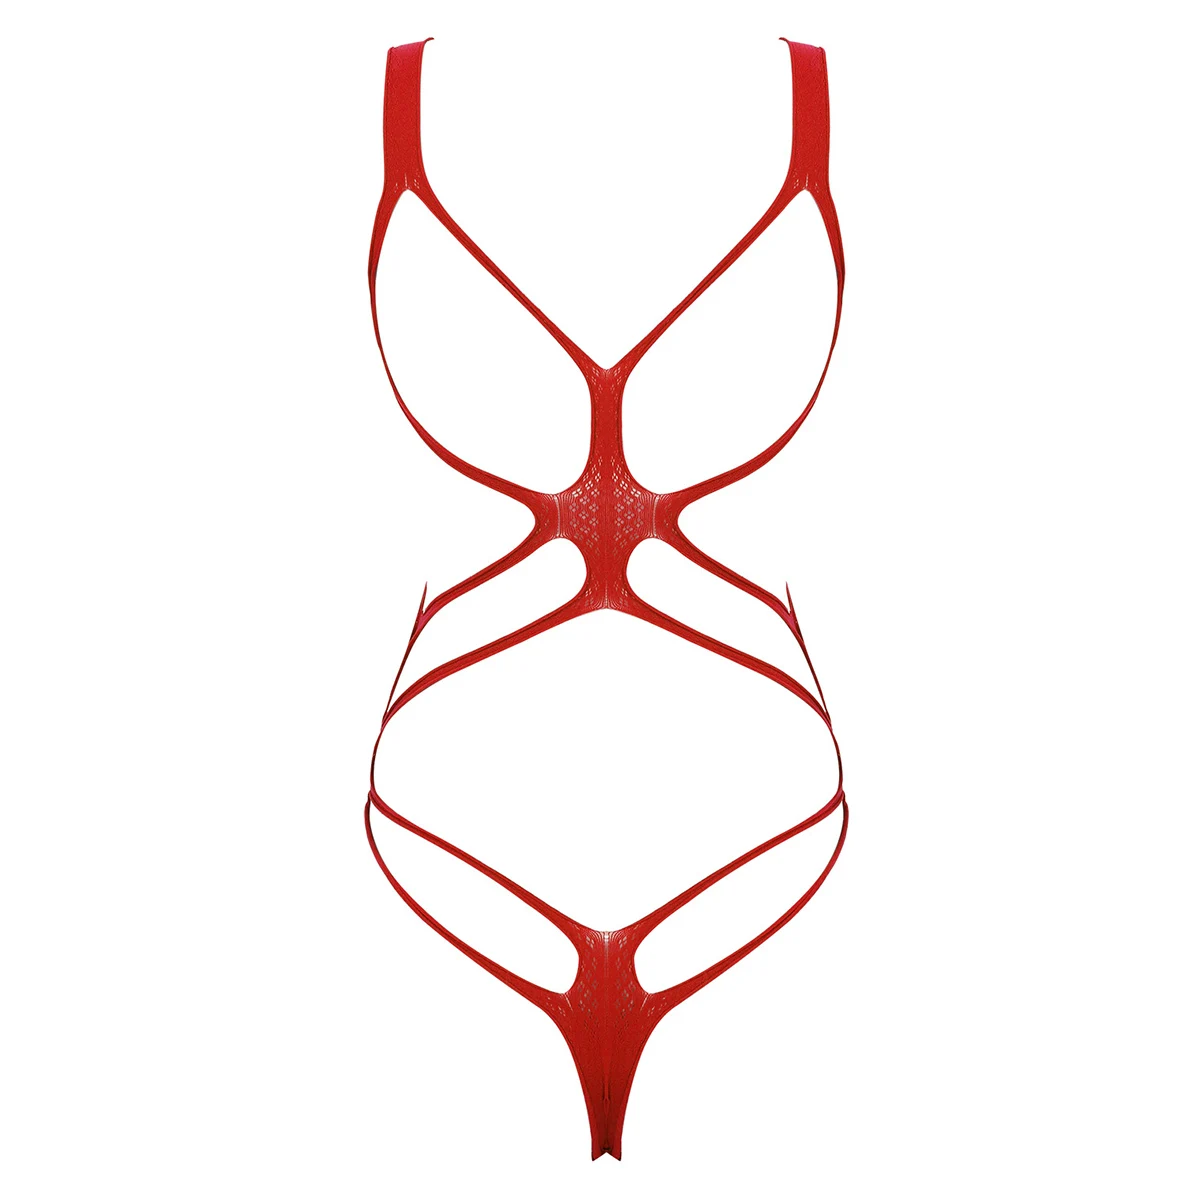 iiniim Womens Femme One-piece Erotic Hollow Out Fishnet Bodystockings Lingerie Teddies See-through Stretchy Bodysuits Nightwear